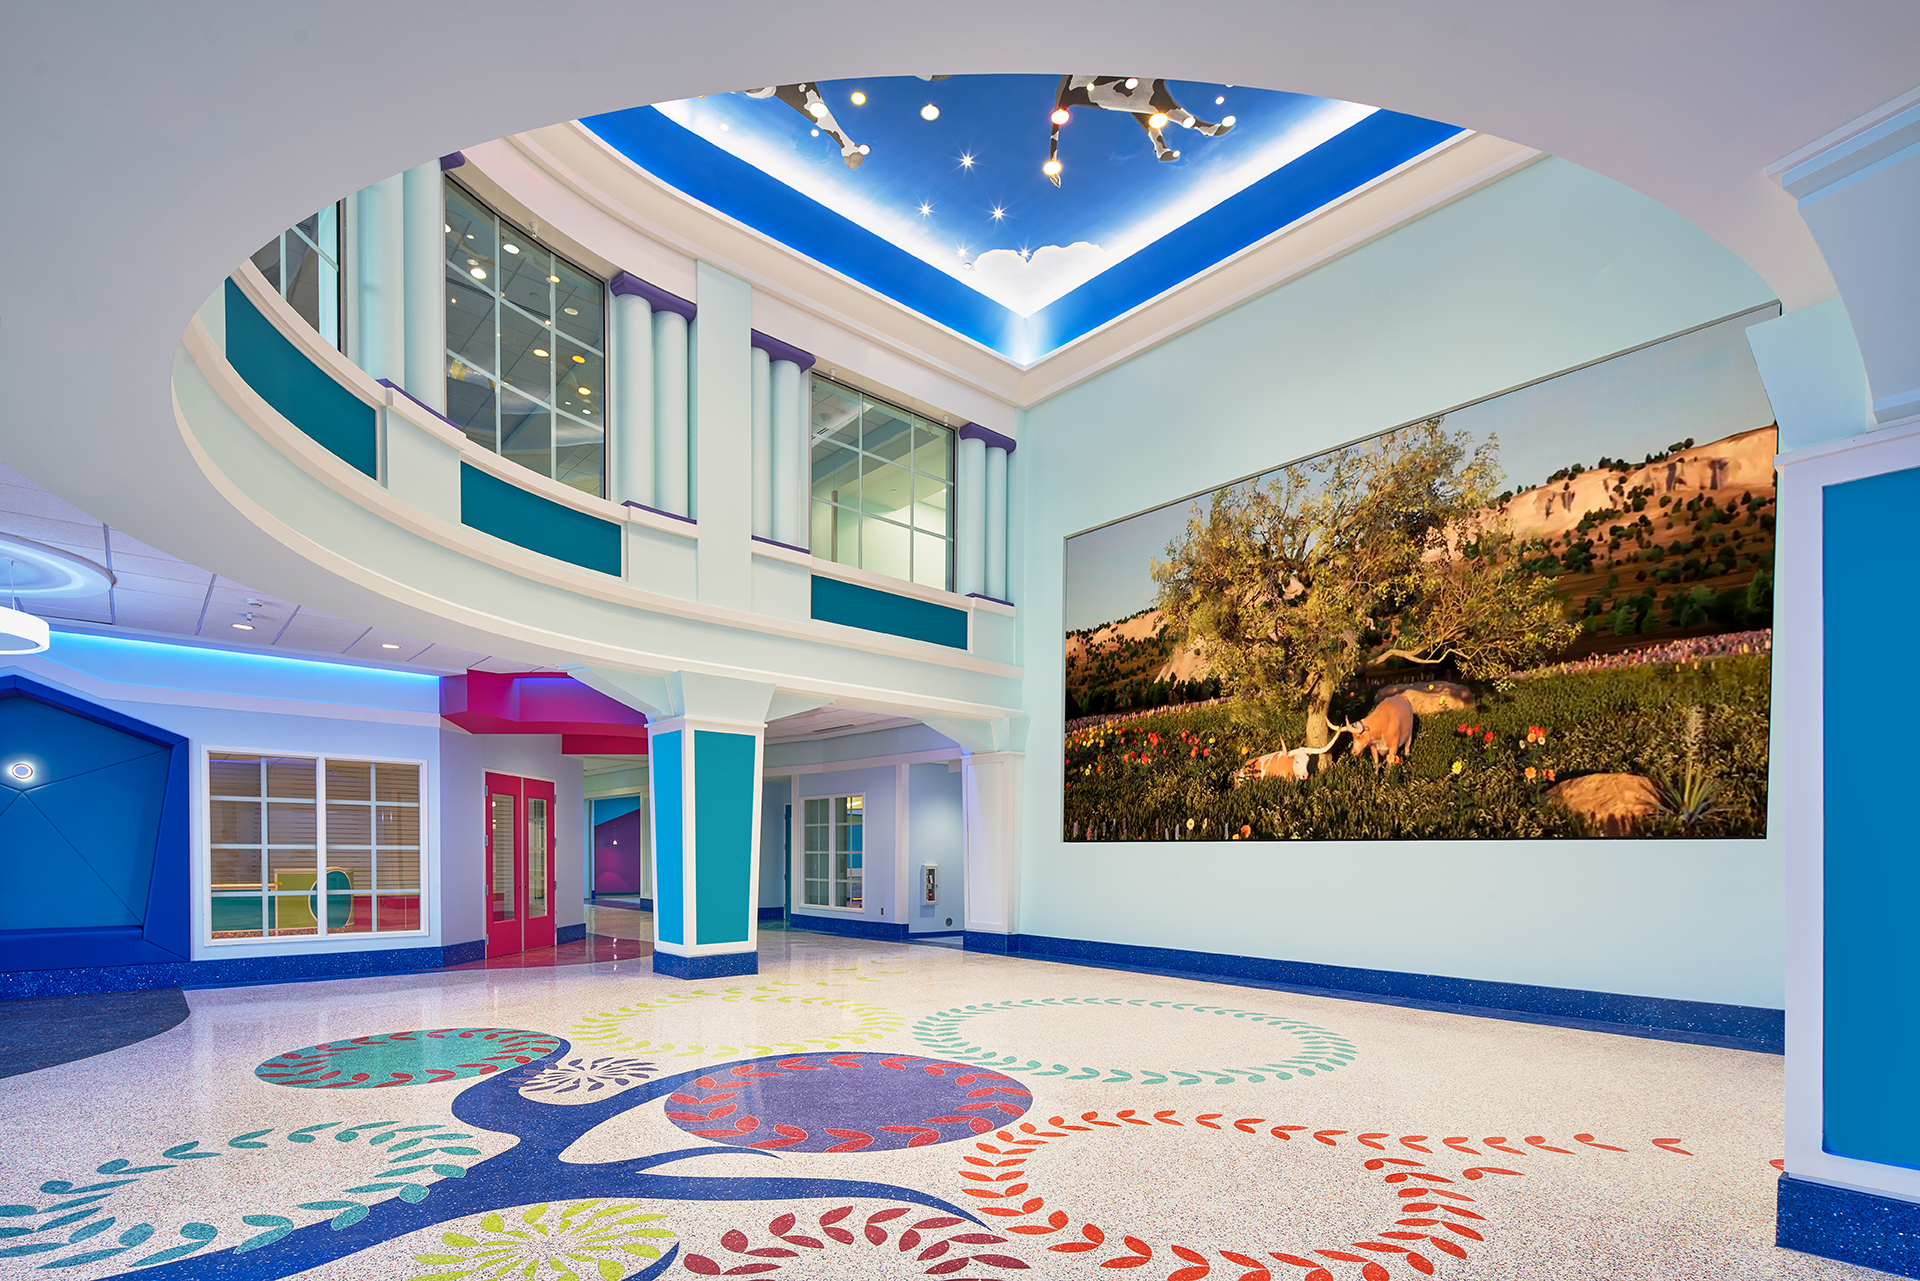 Image of Children's hospital entrance hall with digital annimation